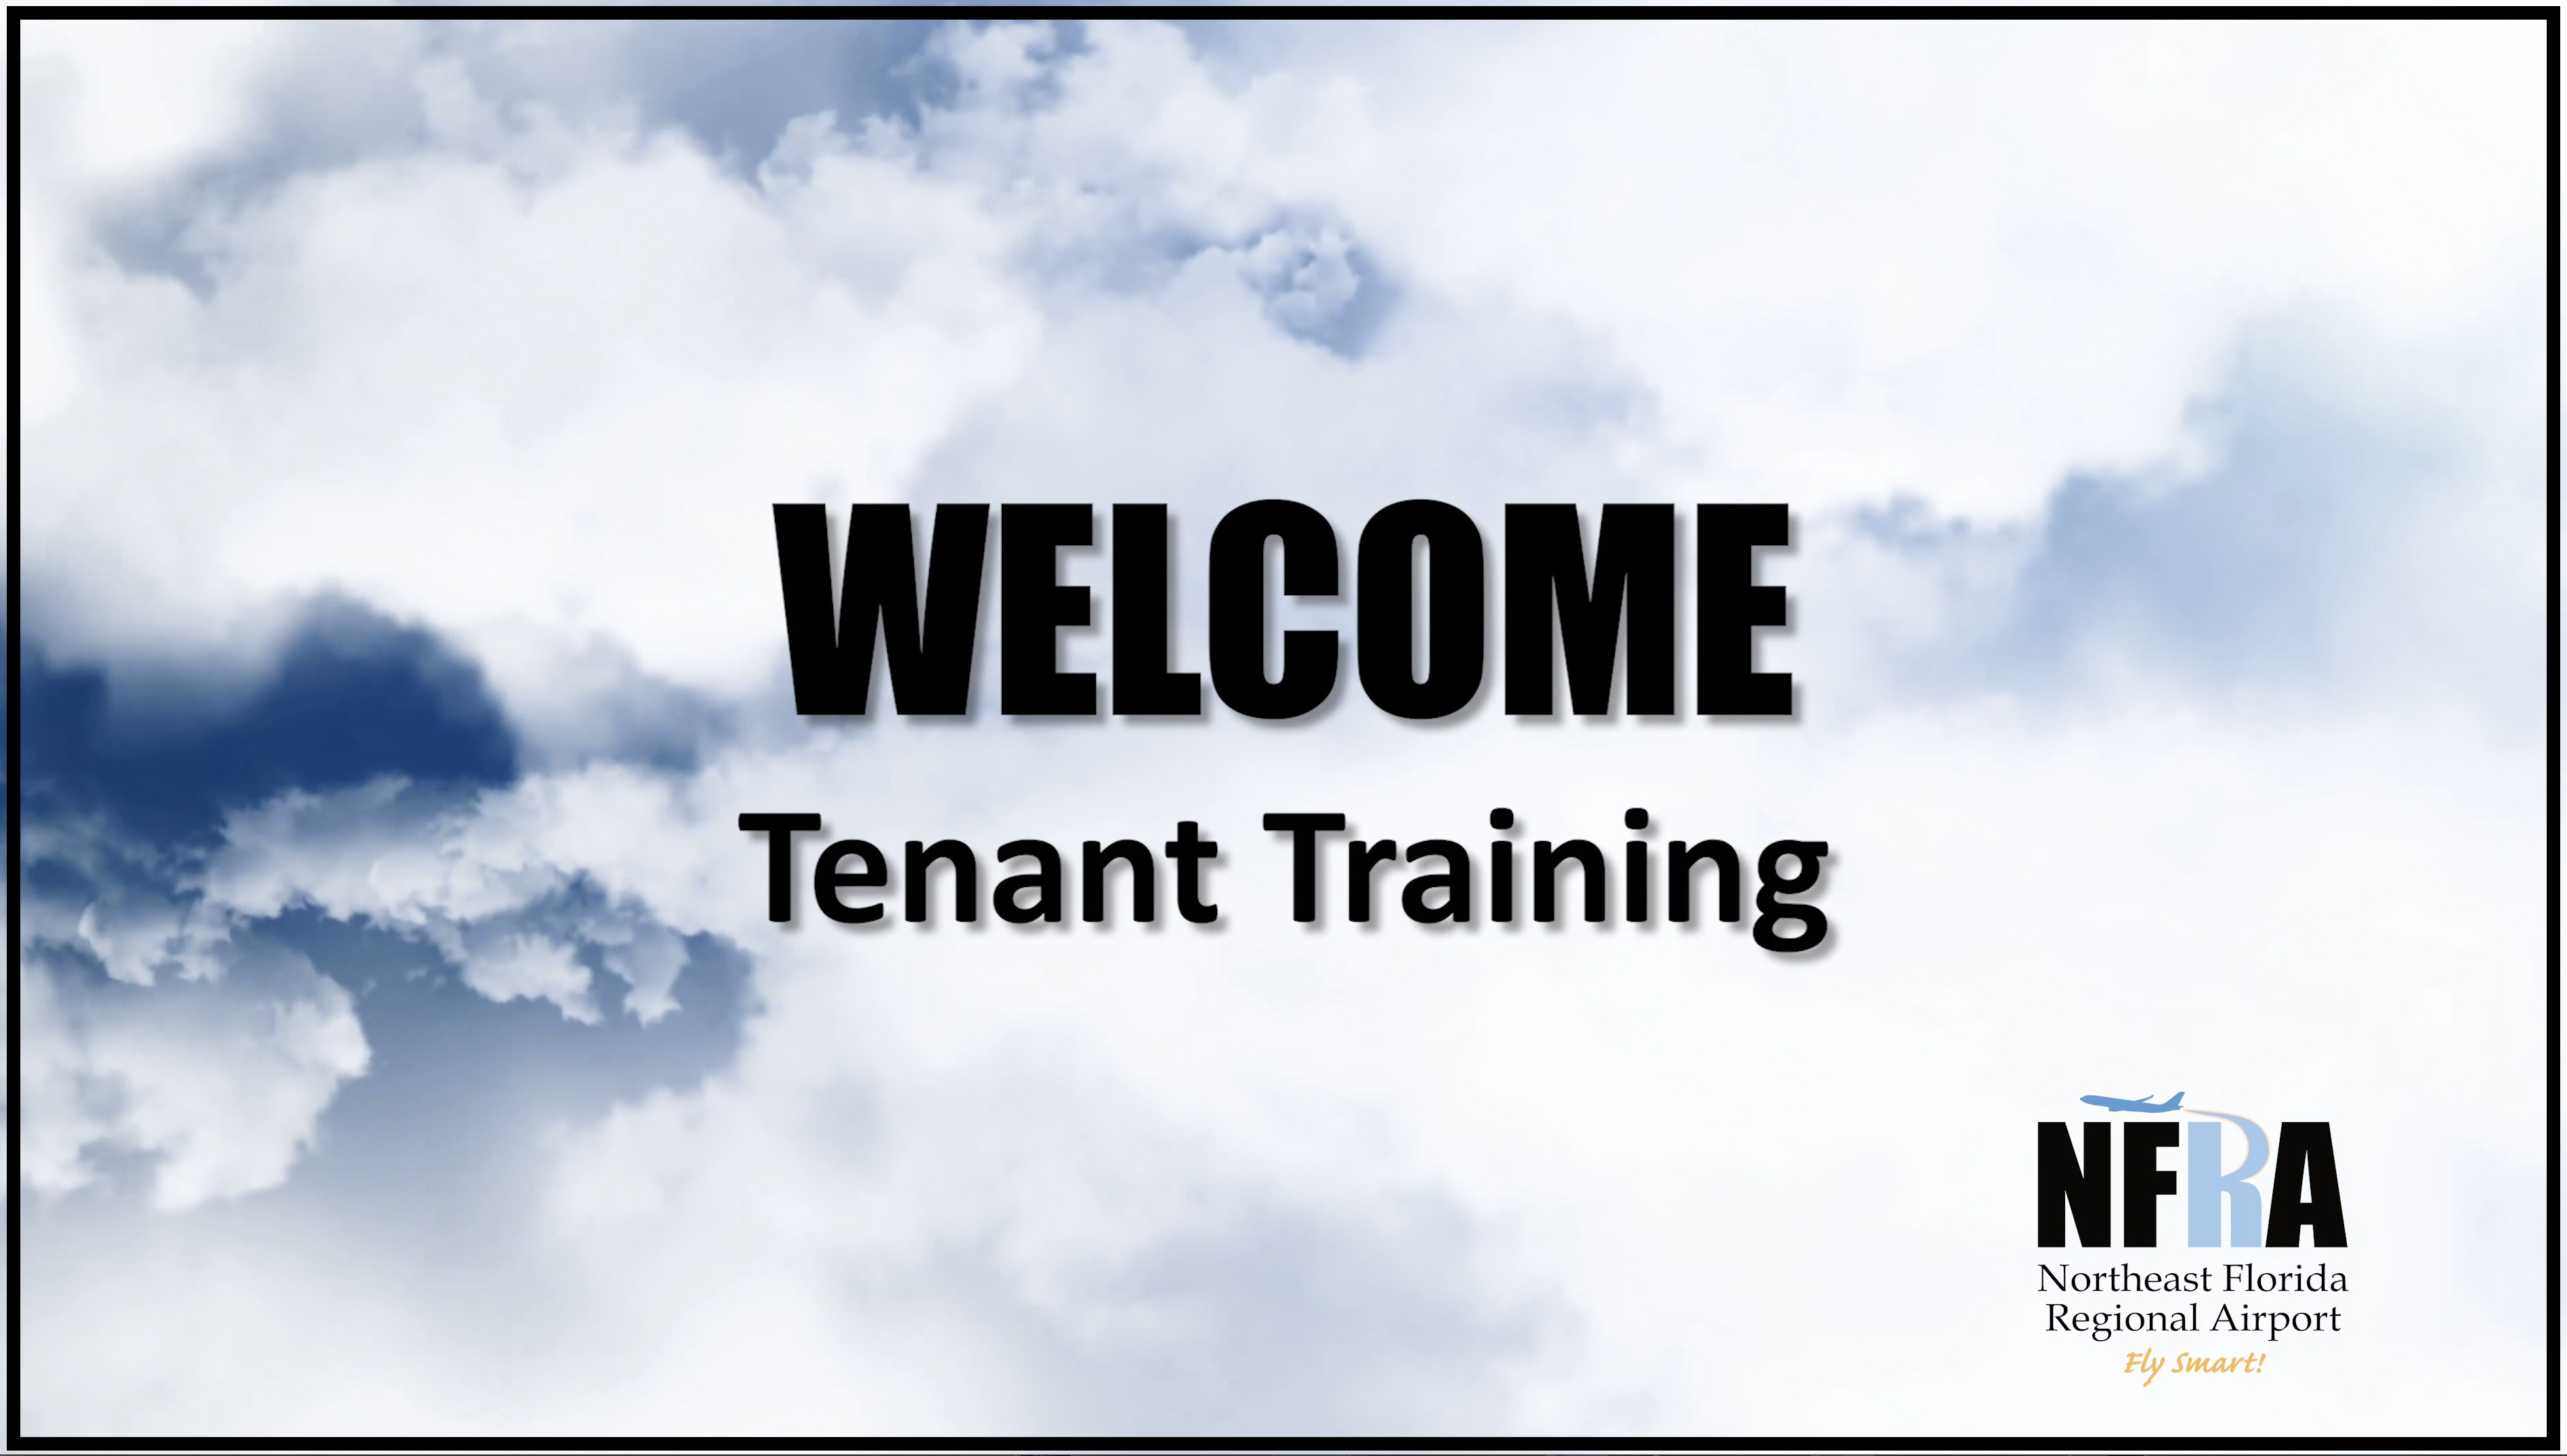 Tenant Training Video Image